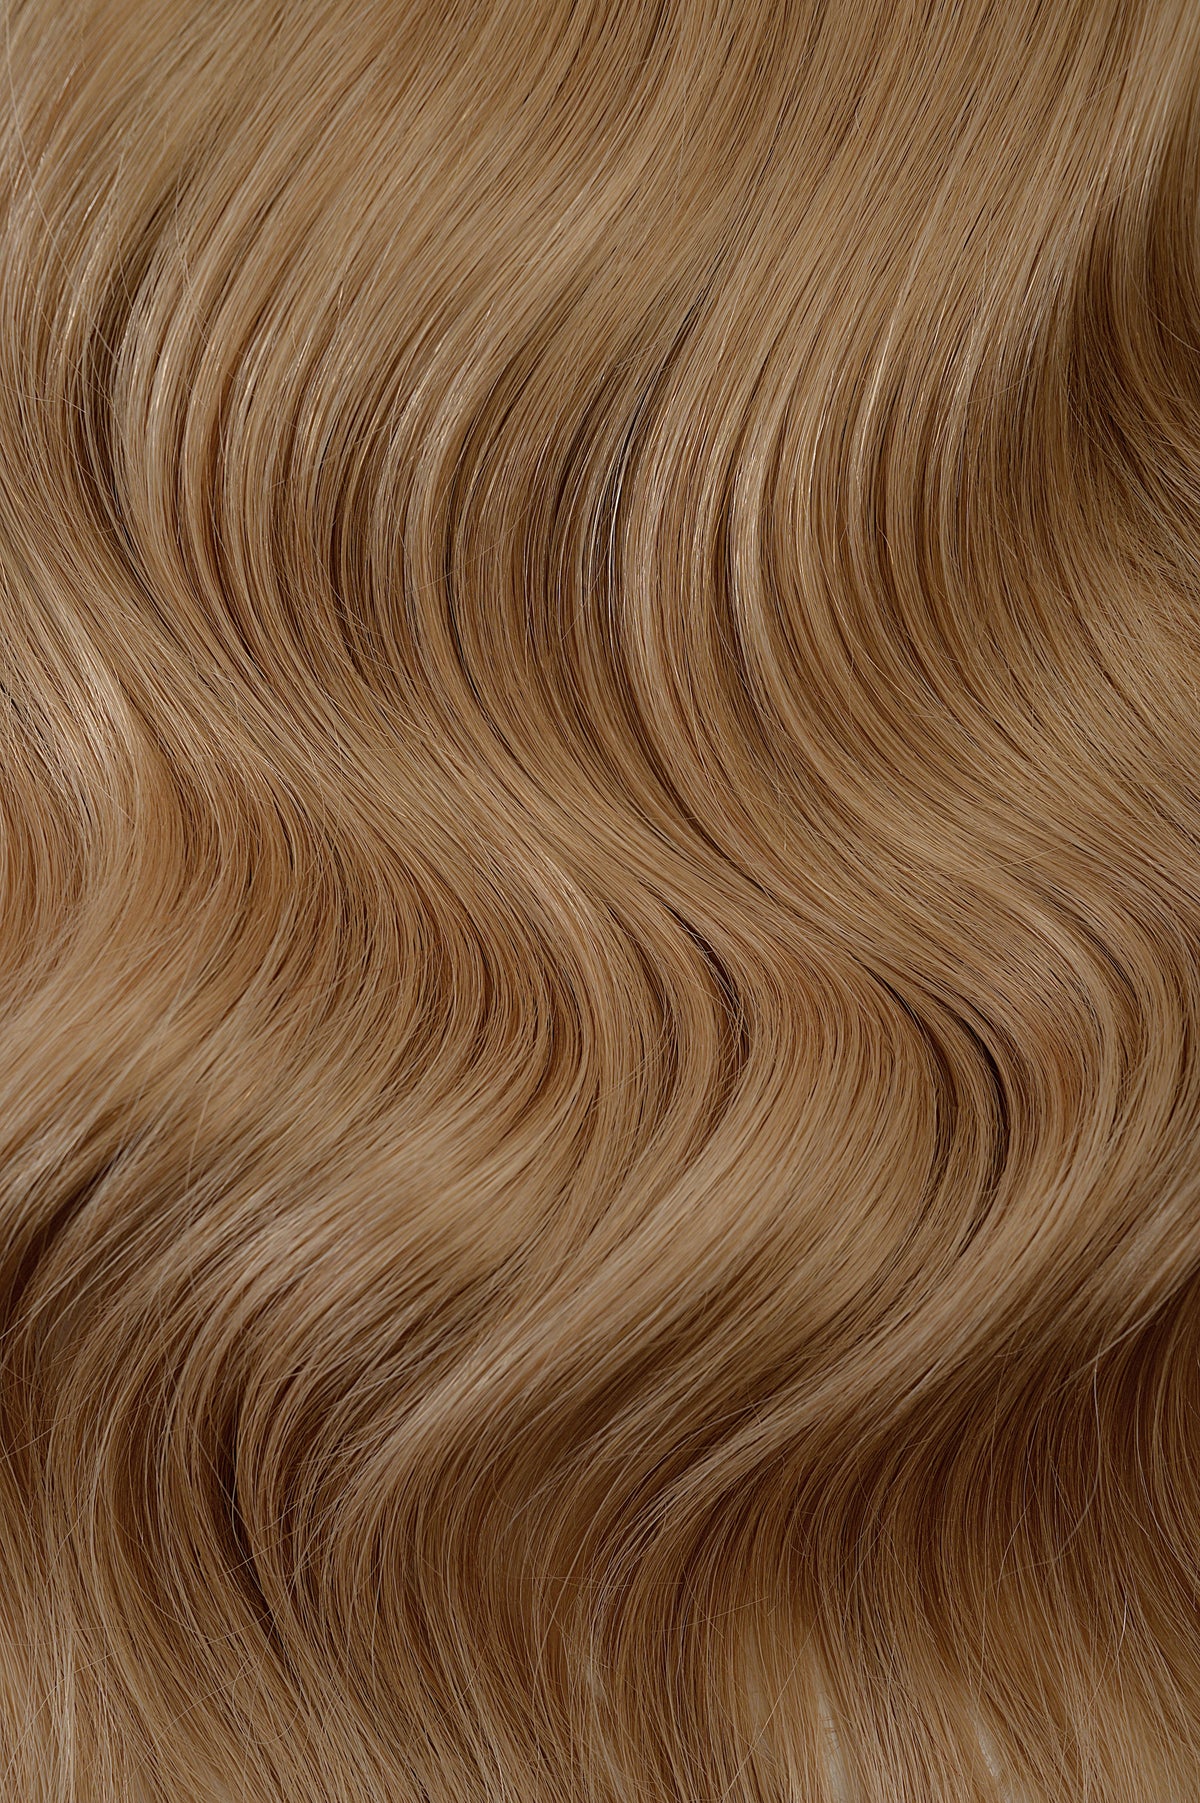 #23 Golden Blonde Nano Tip Hair Extensions